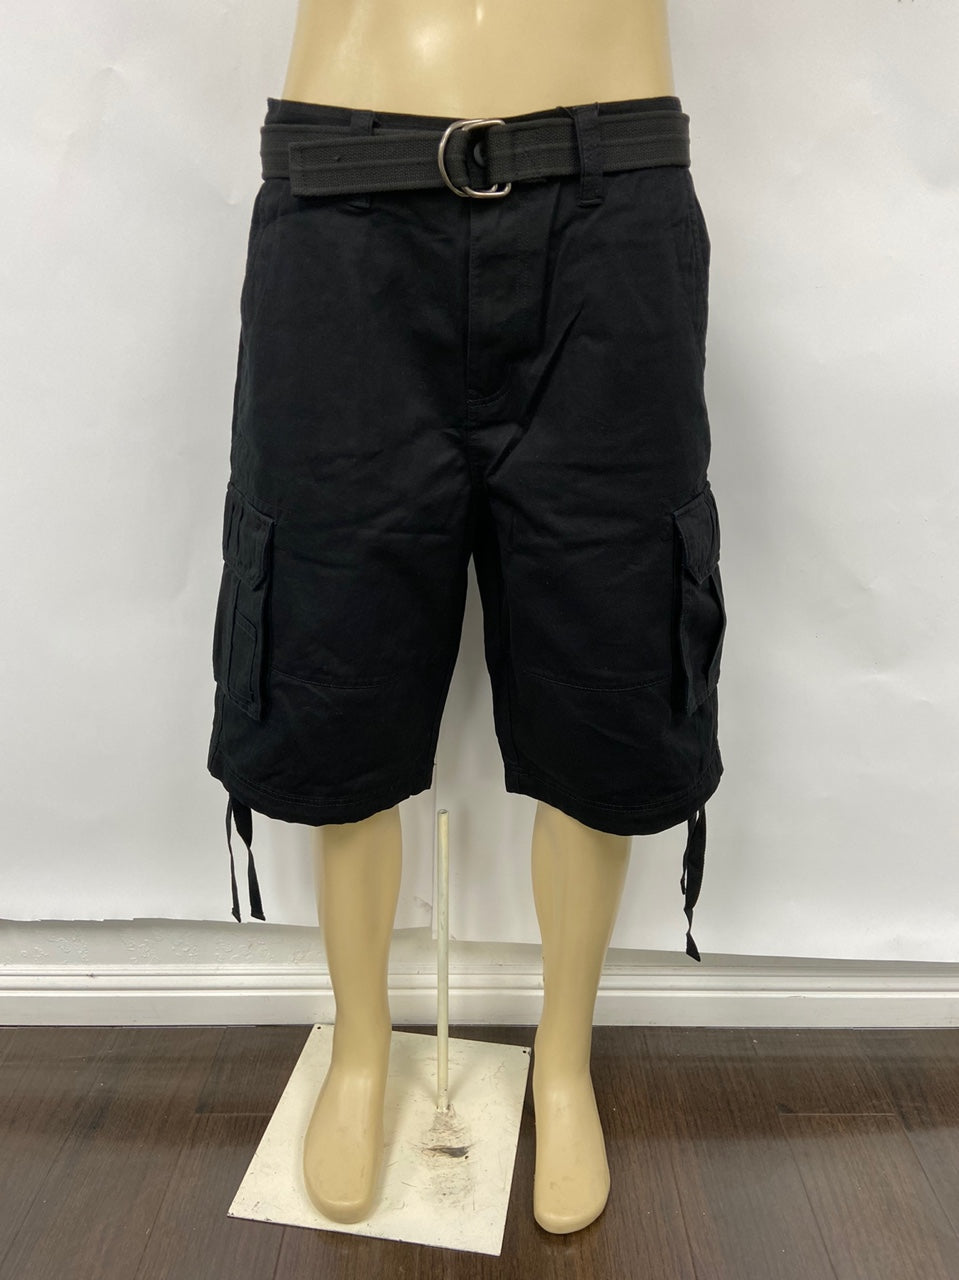 Black Military Cargo Shorts with Pockets